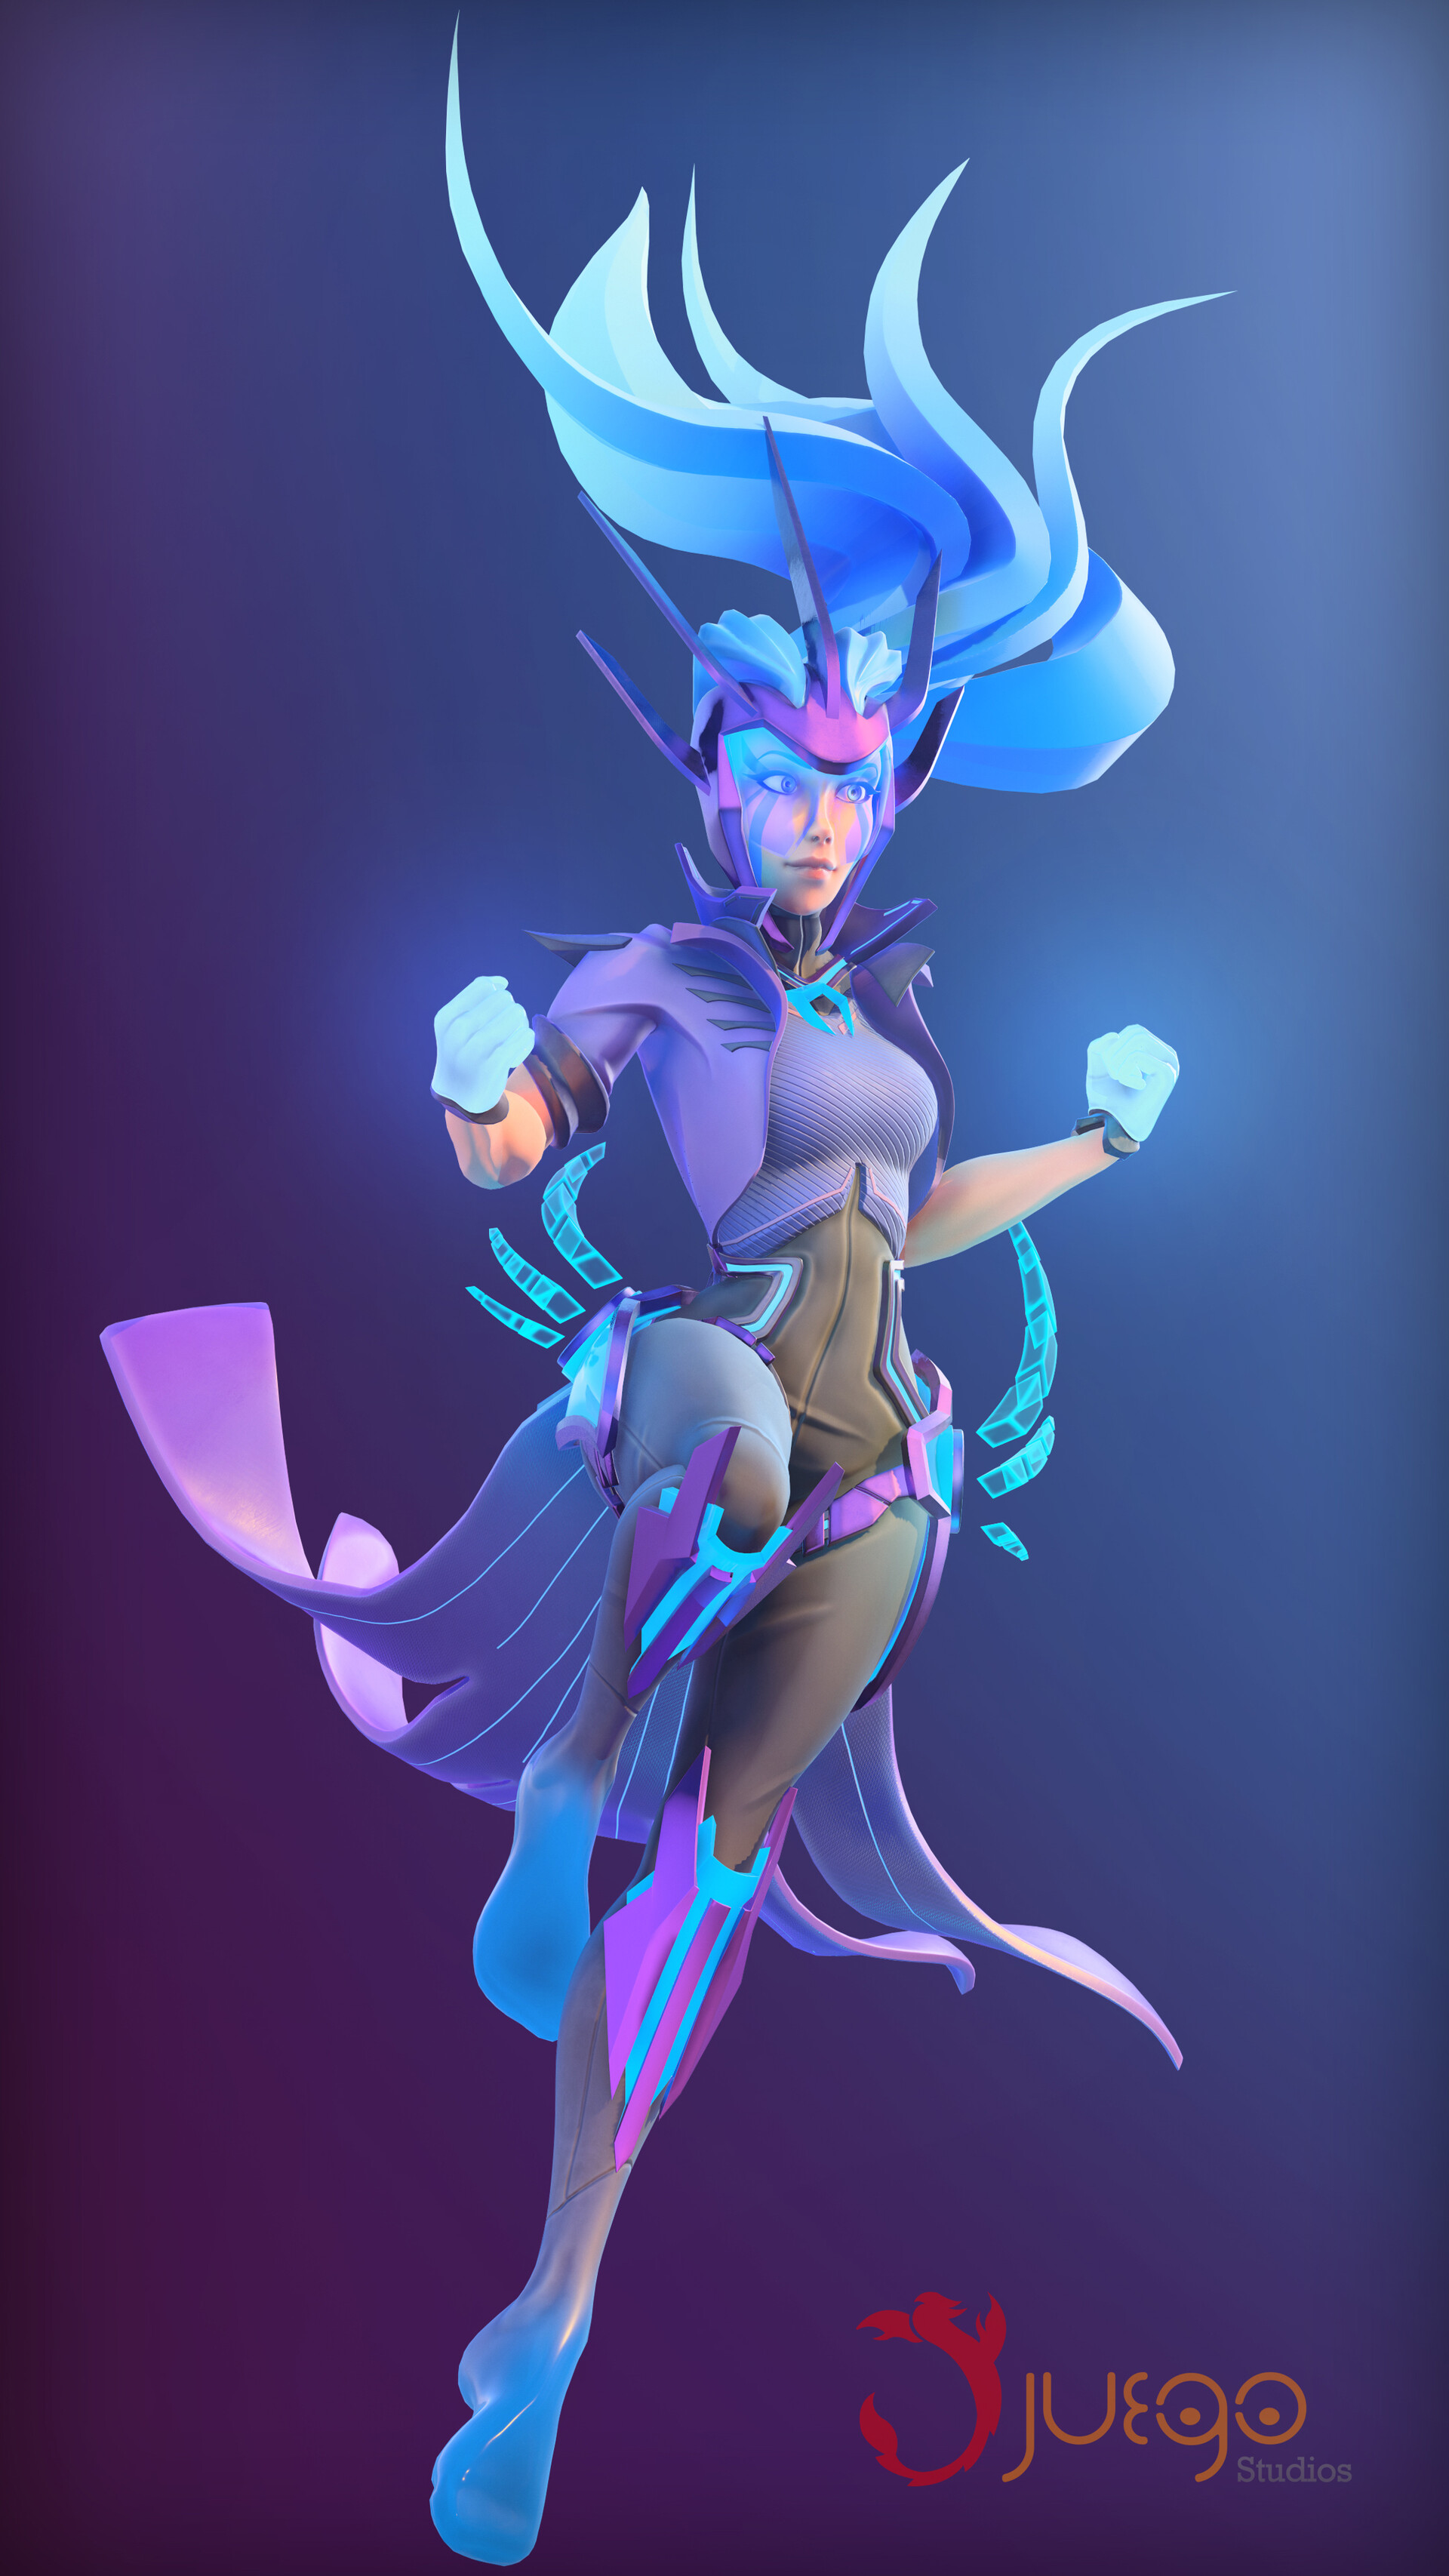 ArtStation - Pixel Female Mage Character Concept